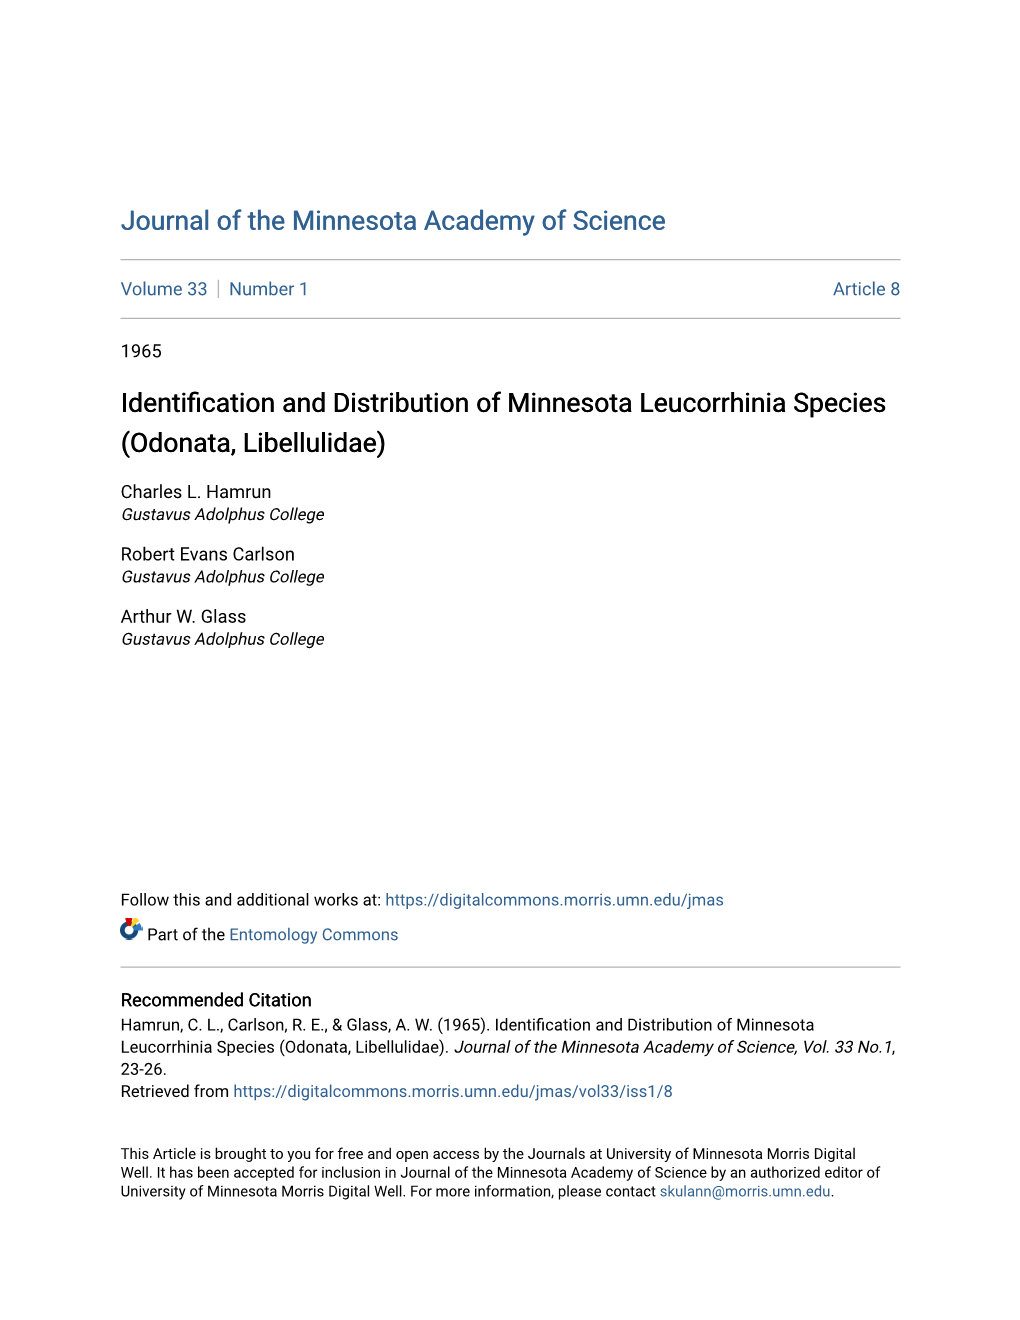 Identification and Distribution of Minnesota Leucorrhinia Species (Odonata, Libellulidae)